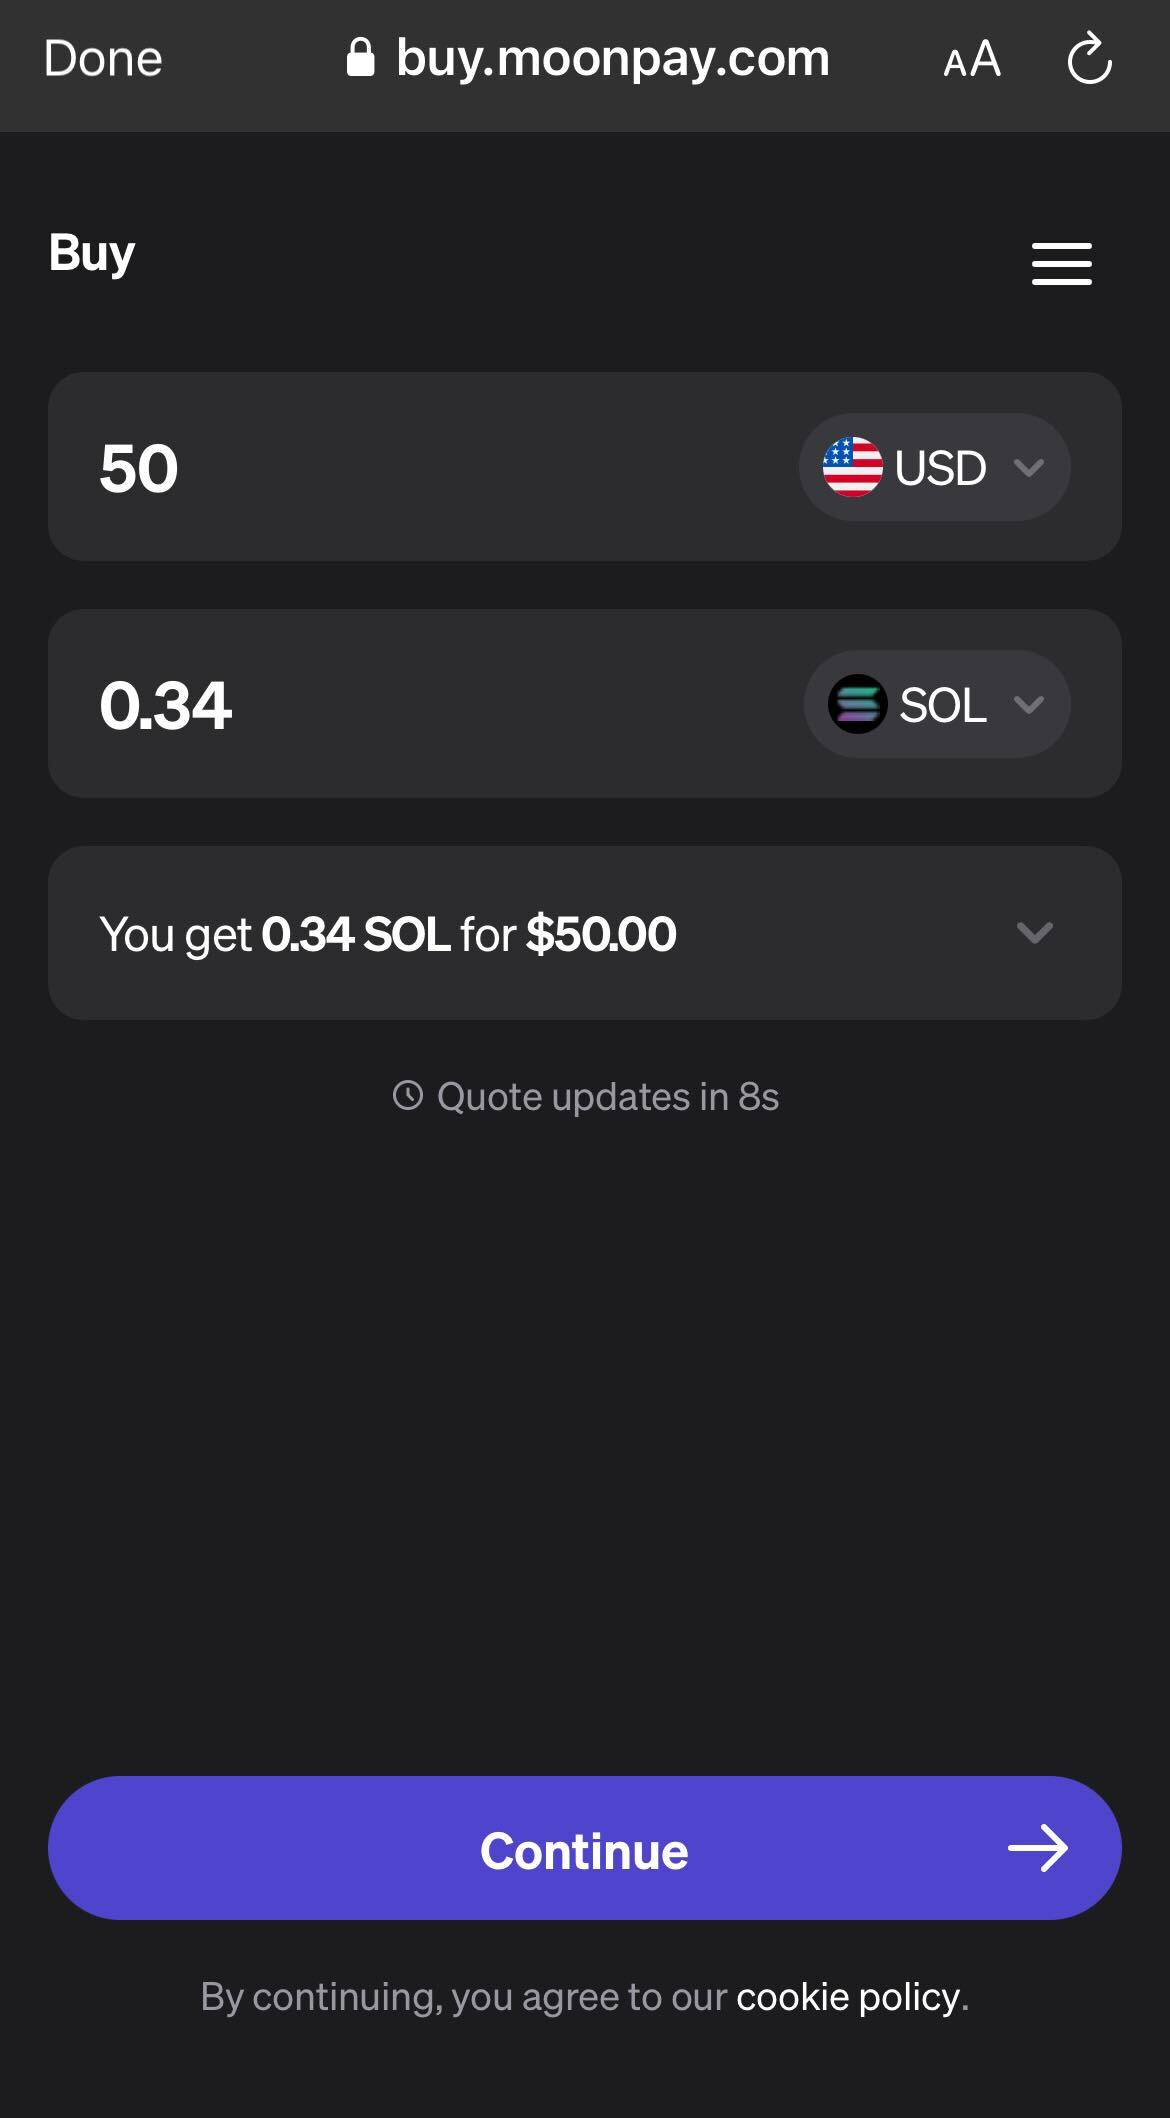 A screenshot to buy SOL using MoonPay in Phantom